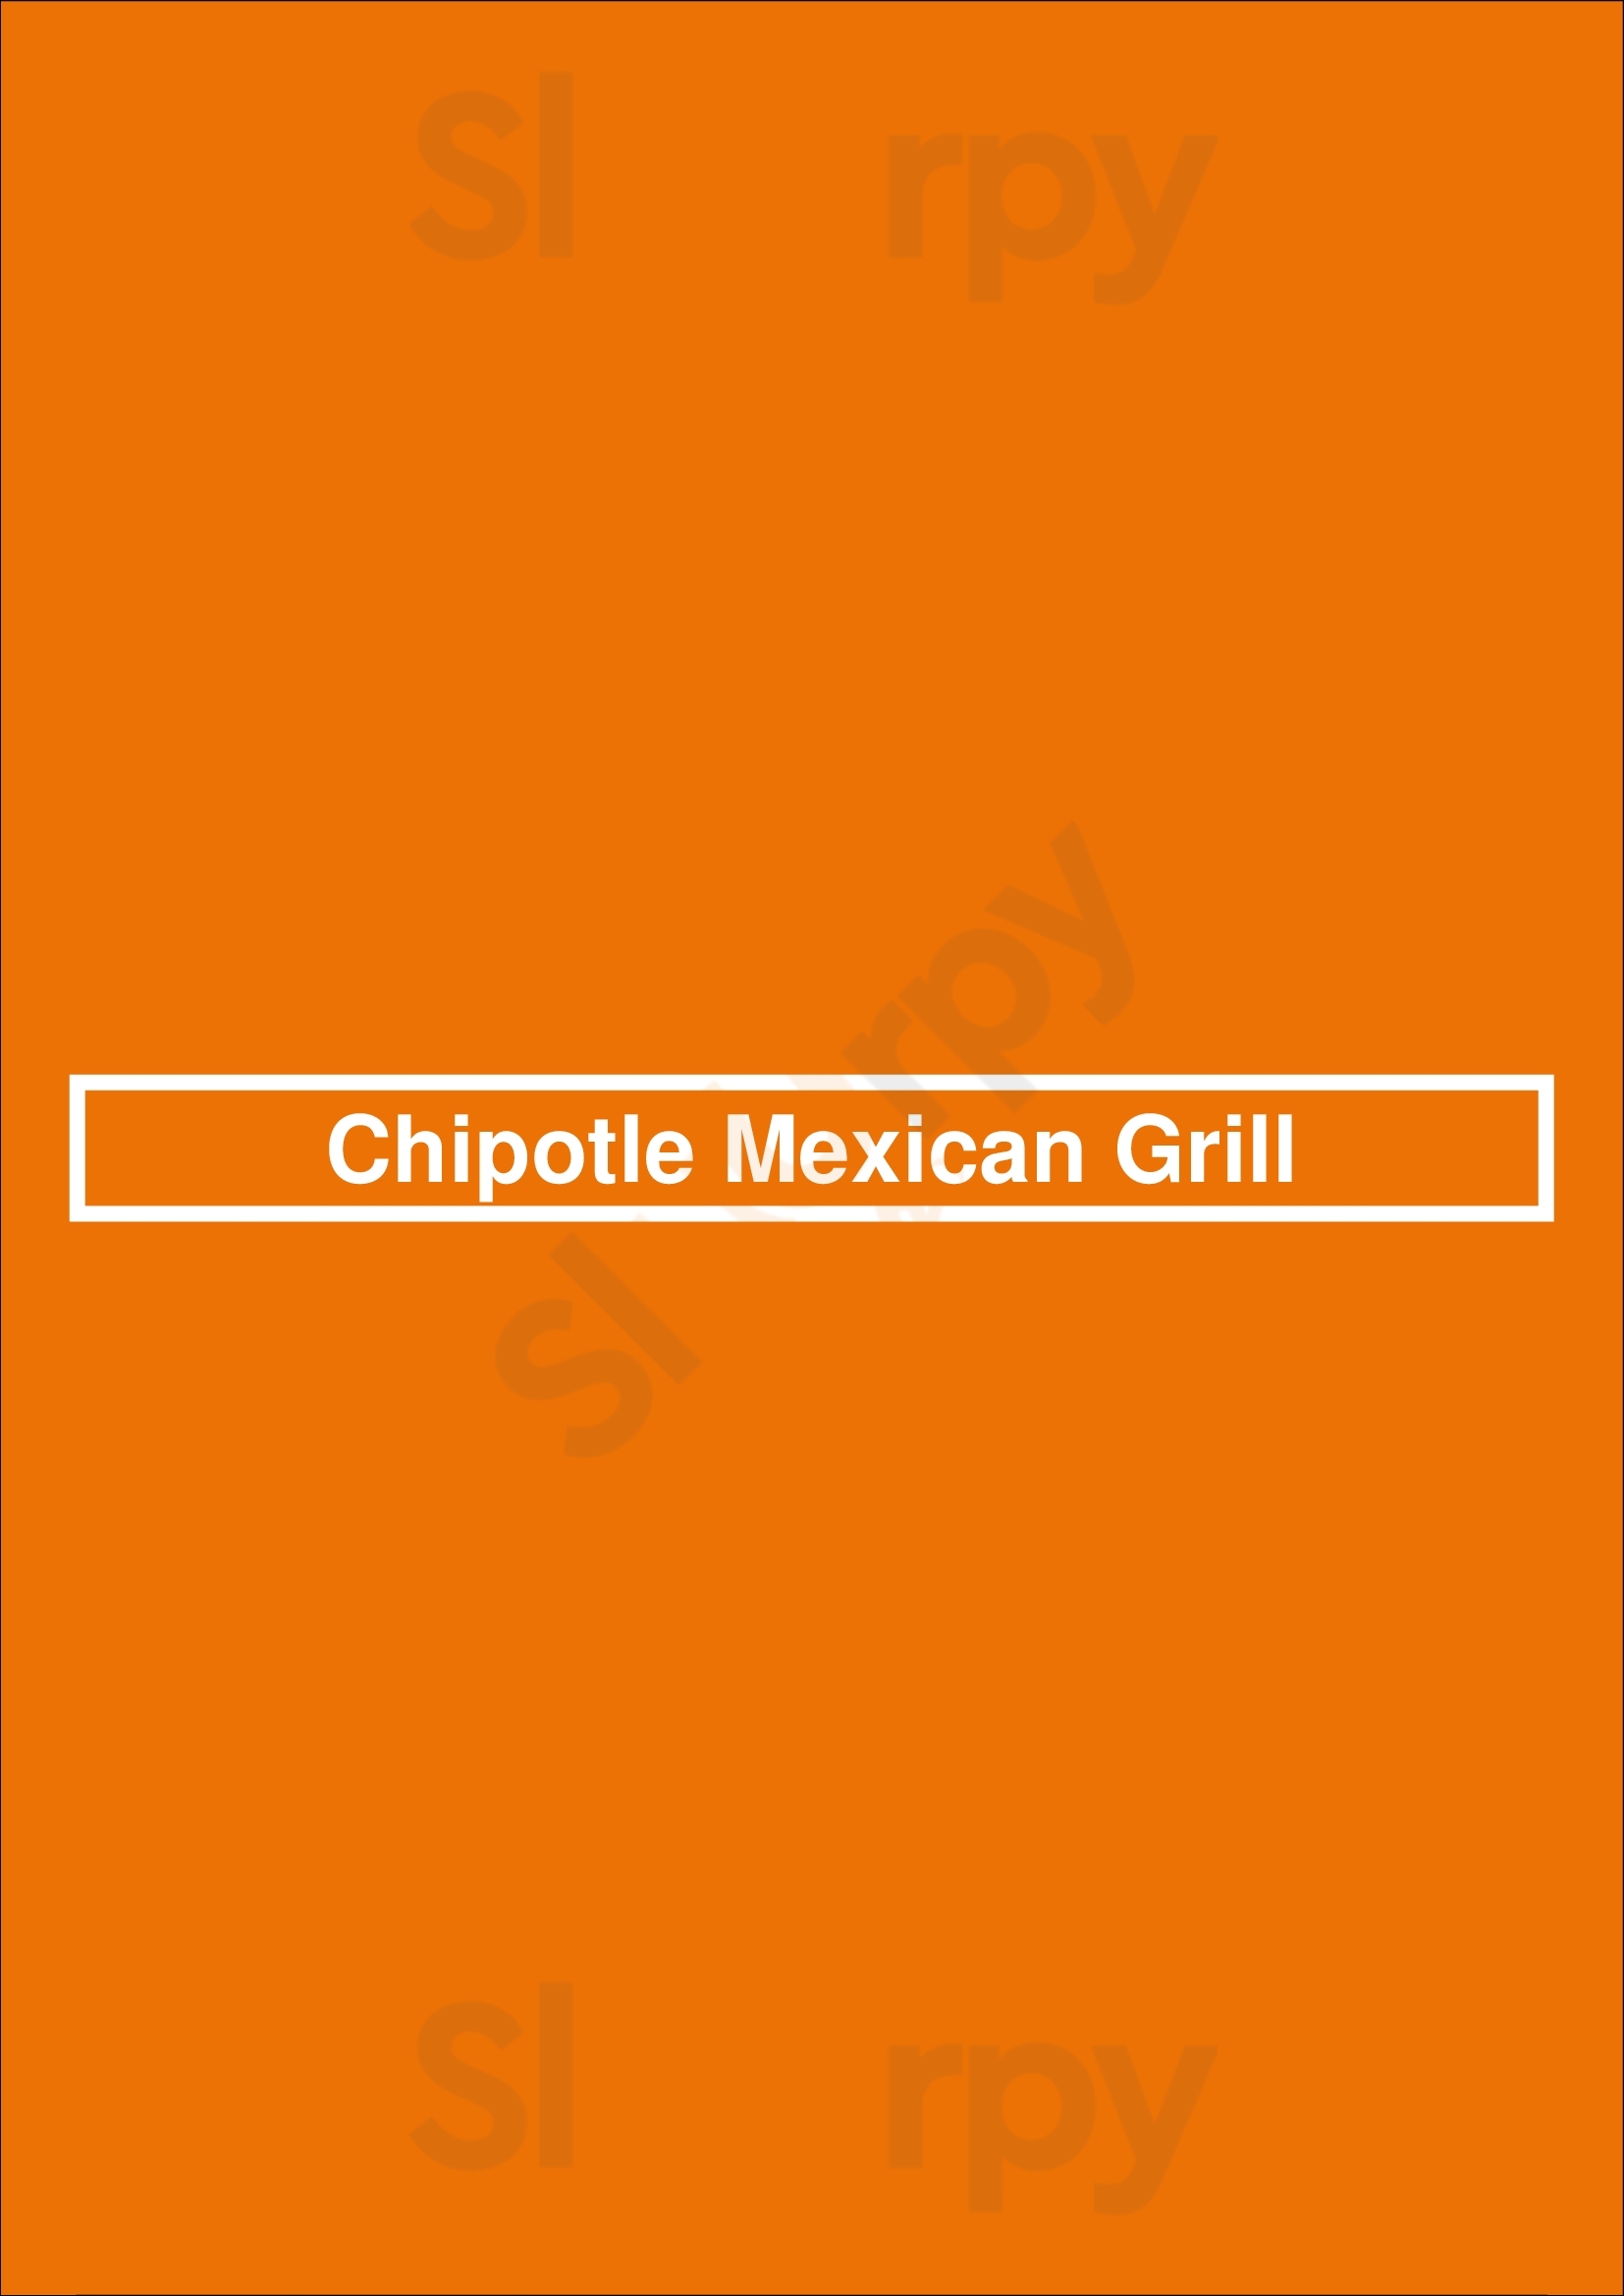 Chipotle Mexican Grill Vancouver Island Menu - 1